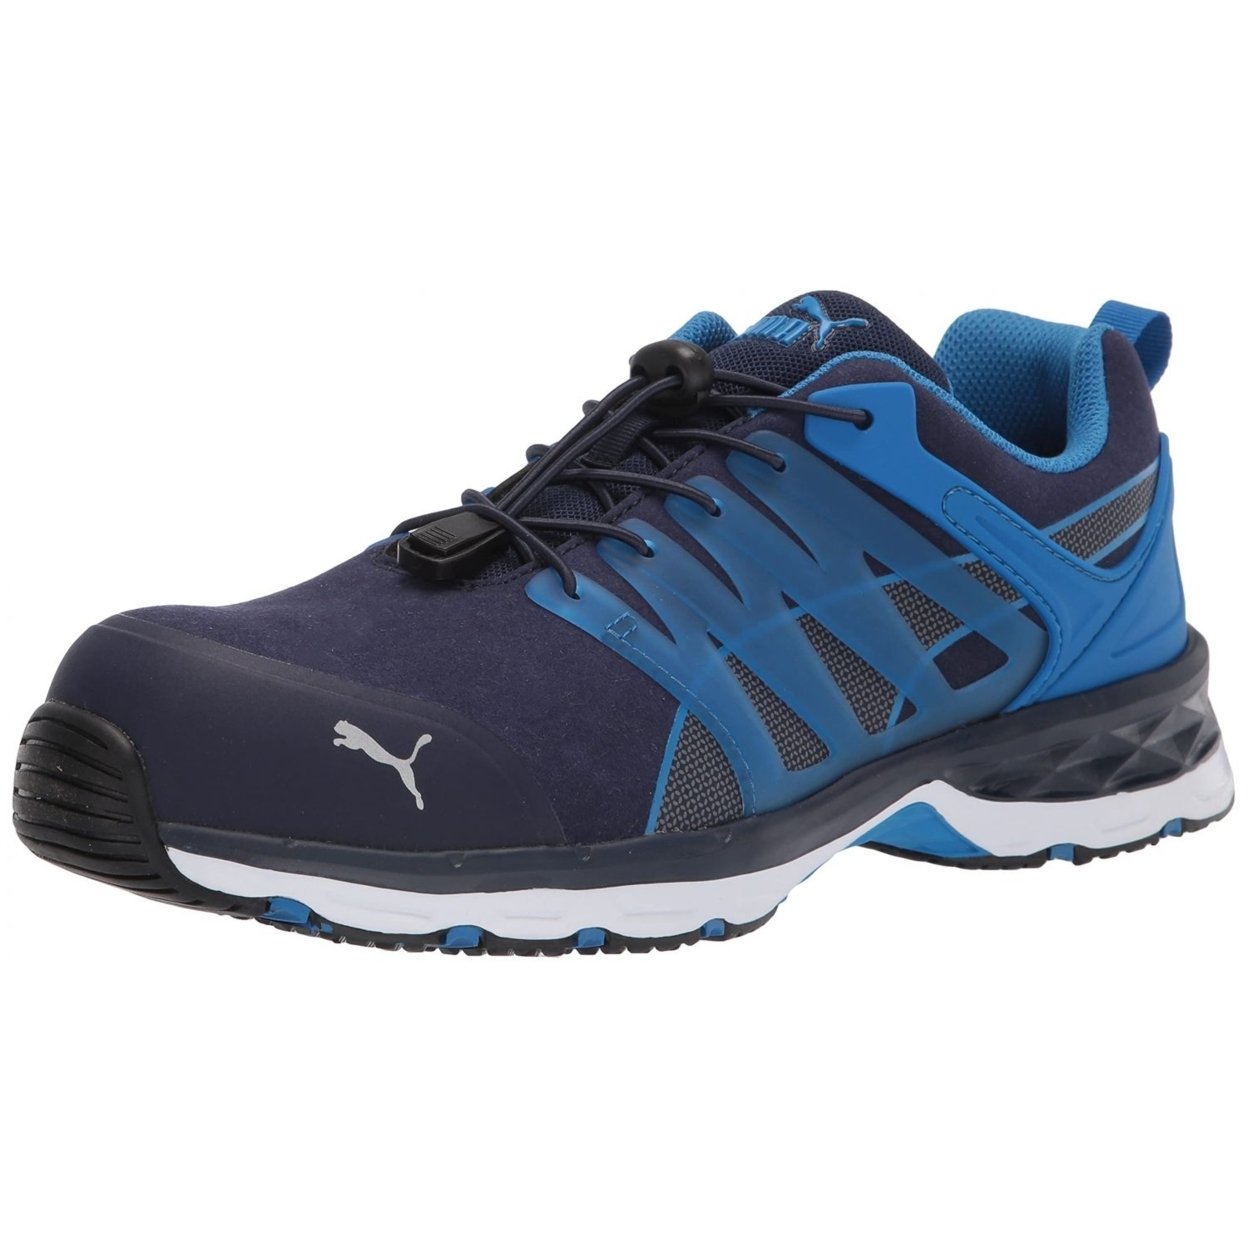 PUMA Safety Men's Velocity 2.0 Composite Toe ESD Work Shoe Blue - 643855 ONE SIZE BLUE - BLUE, 9.5